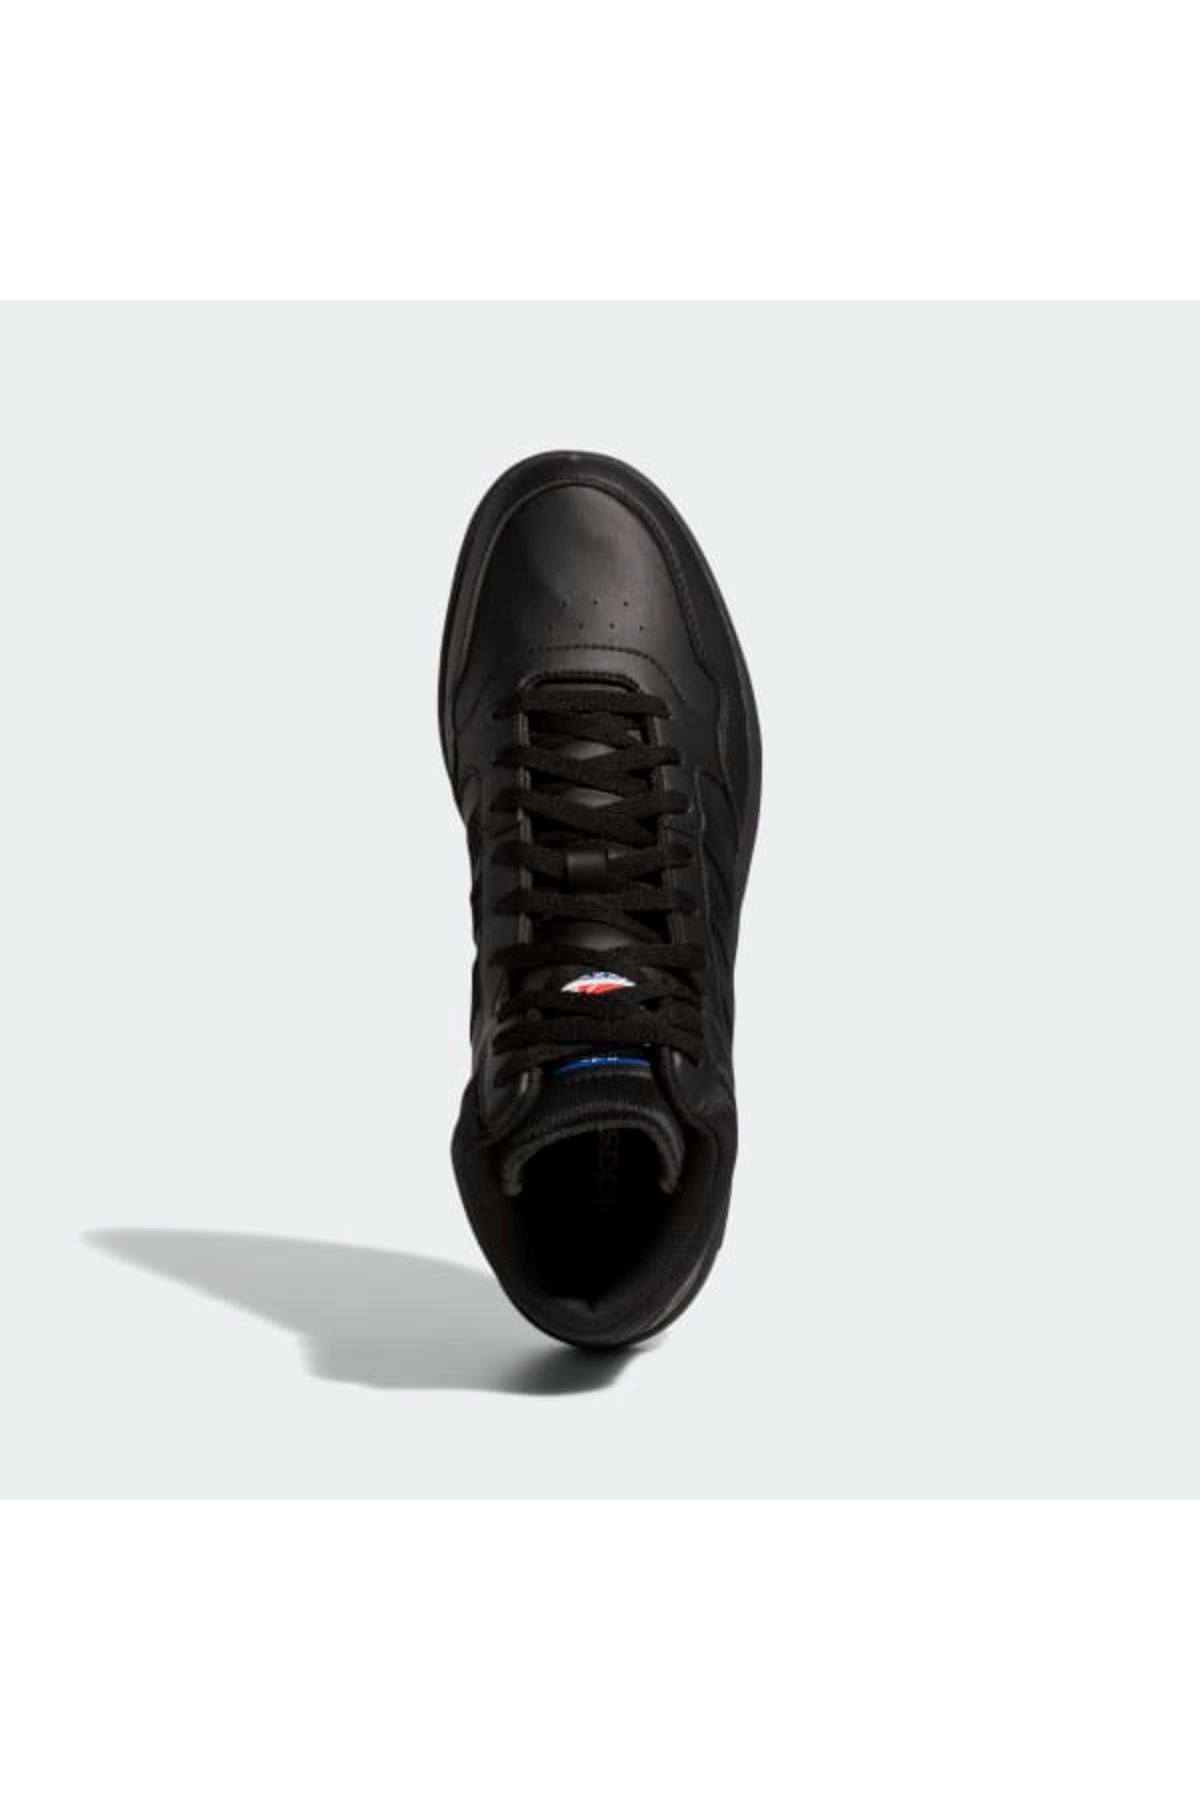 Adidas Hoops 3.0 Erkek Siyah Spor Ayakkabı - GY4745